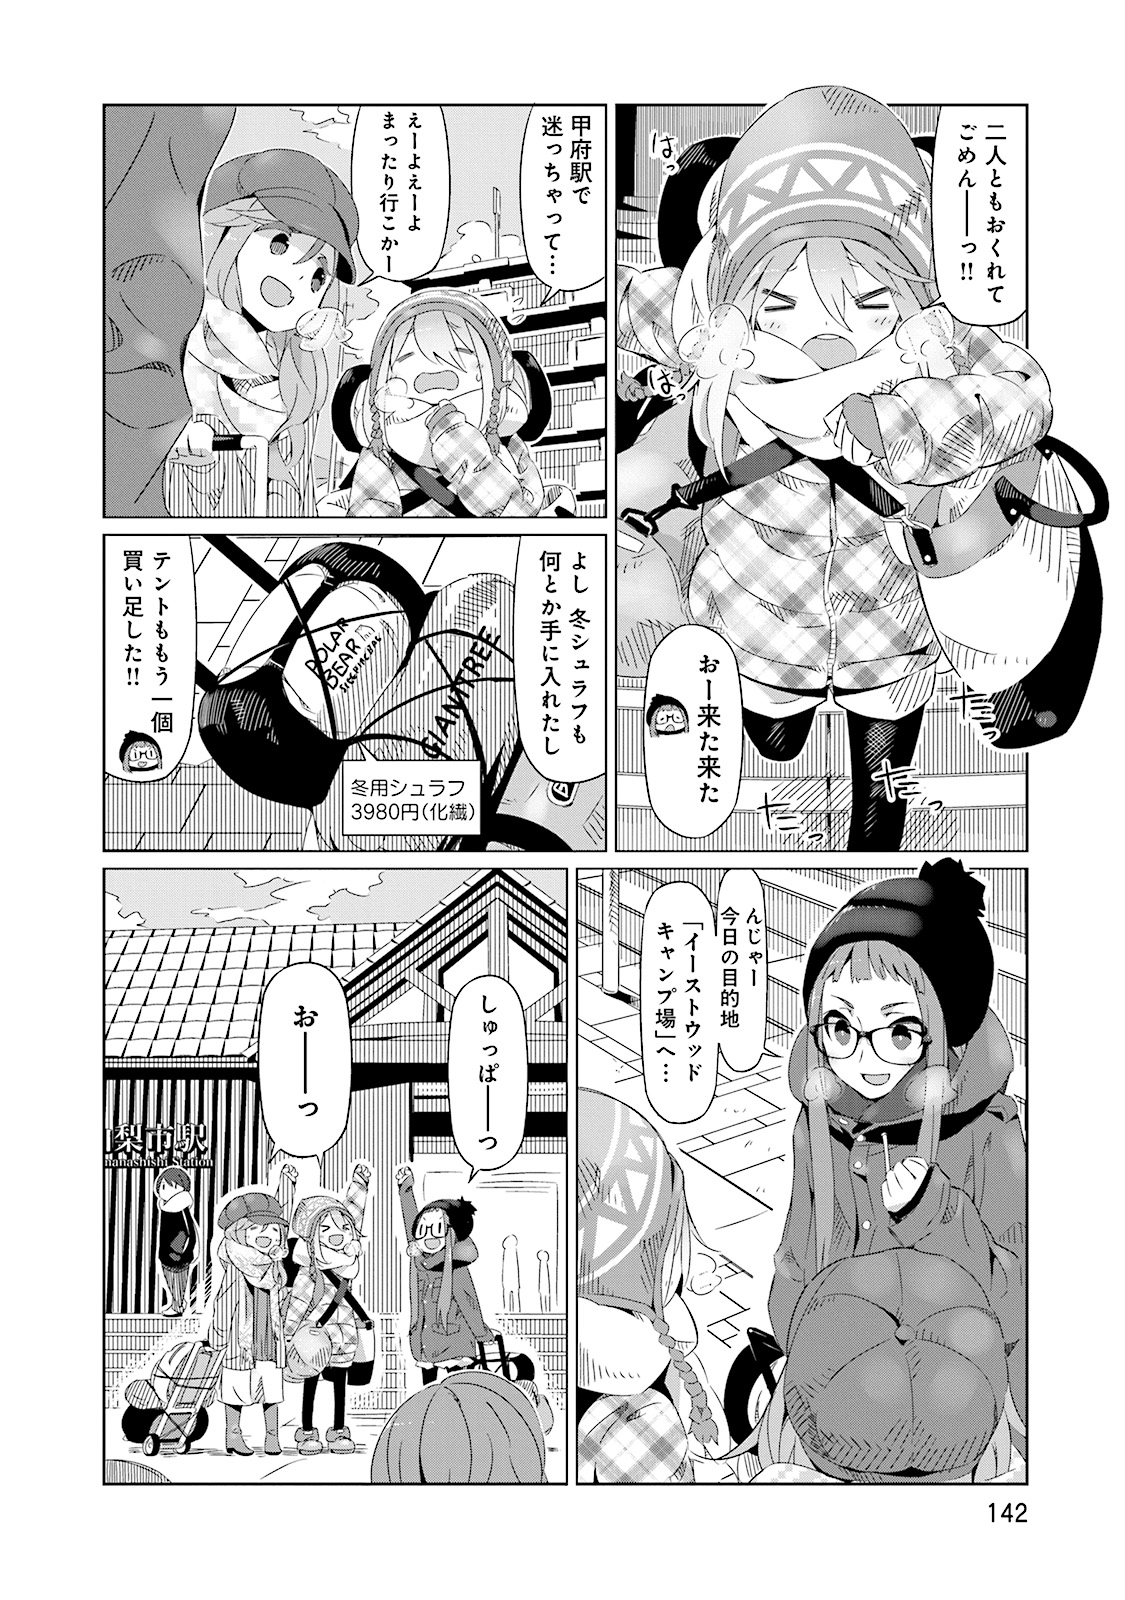 Yuru Camp - Chapter 6 - Page 2